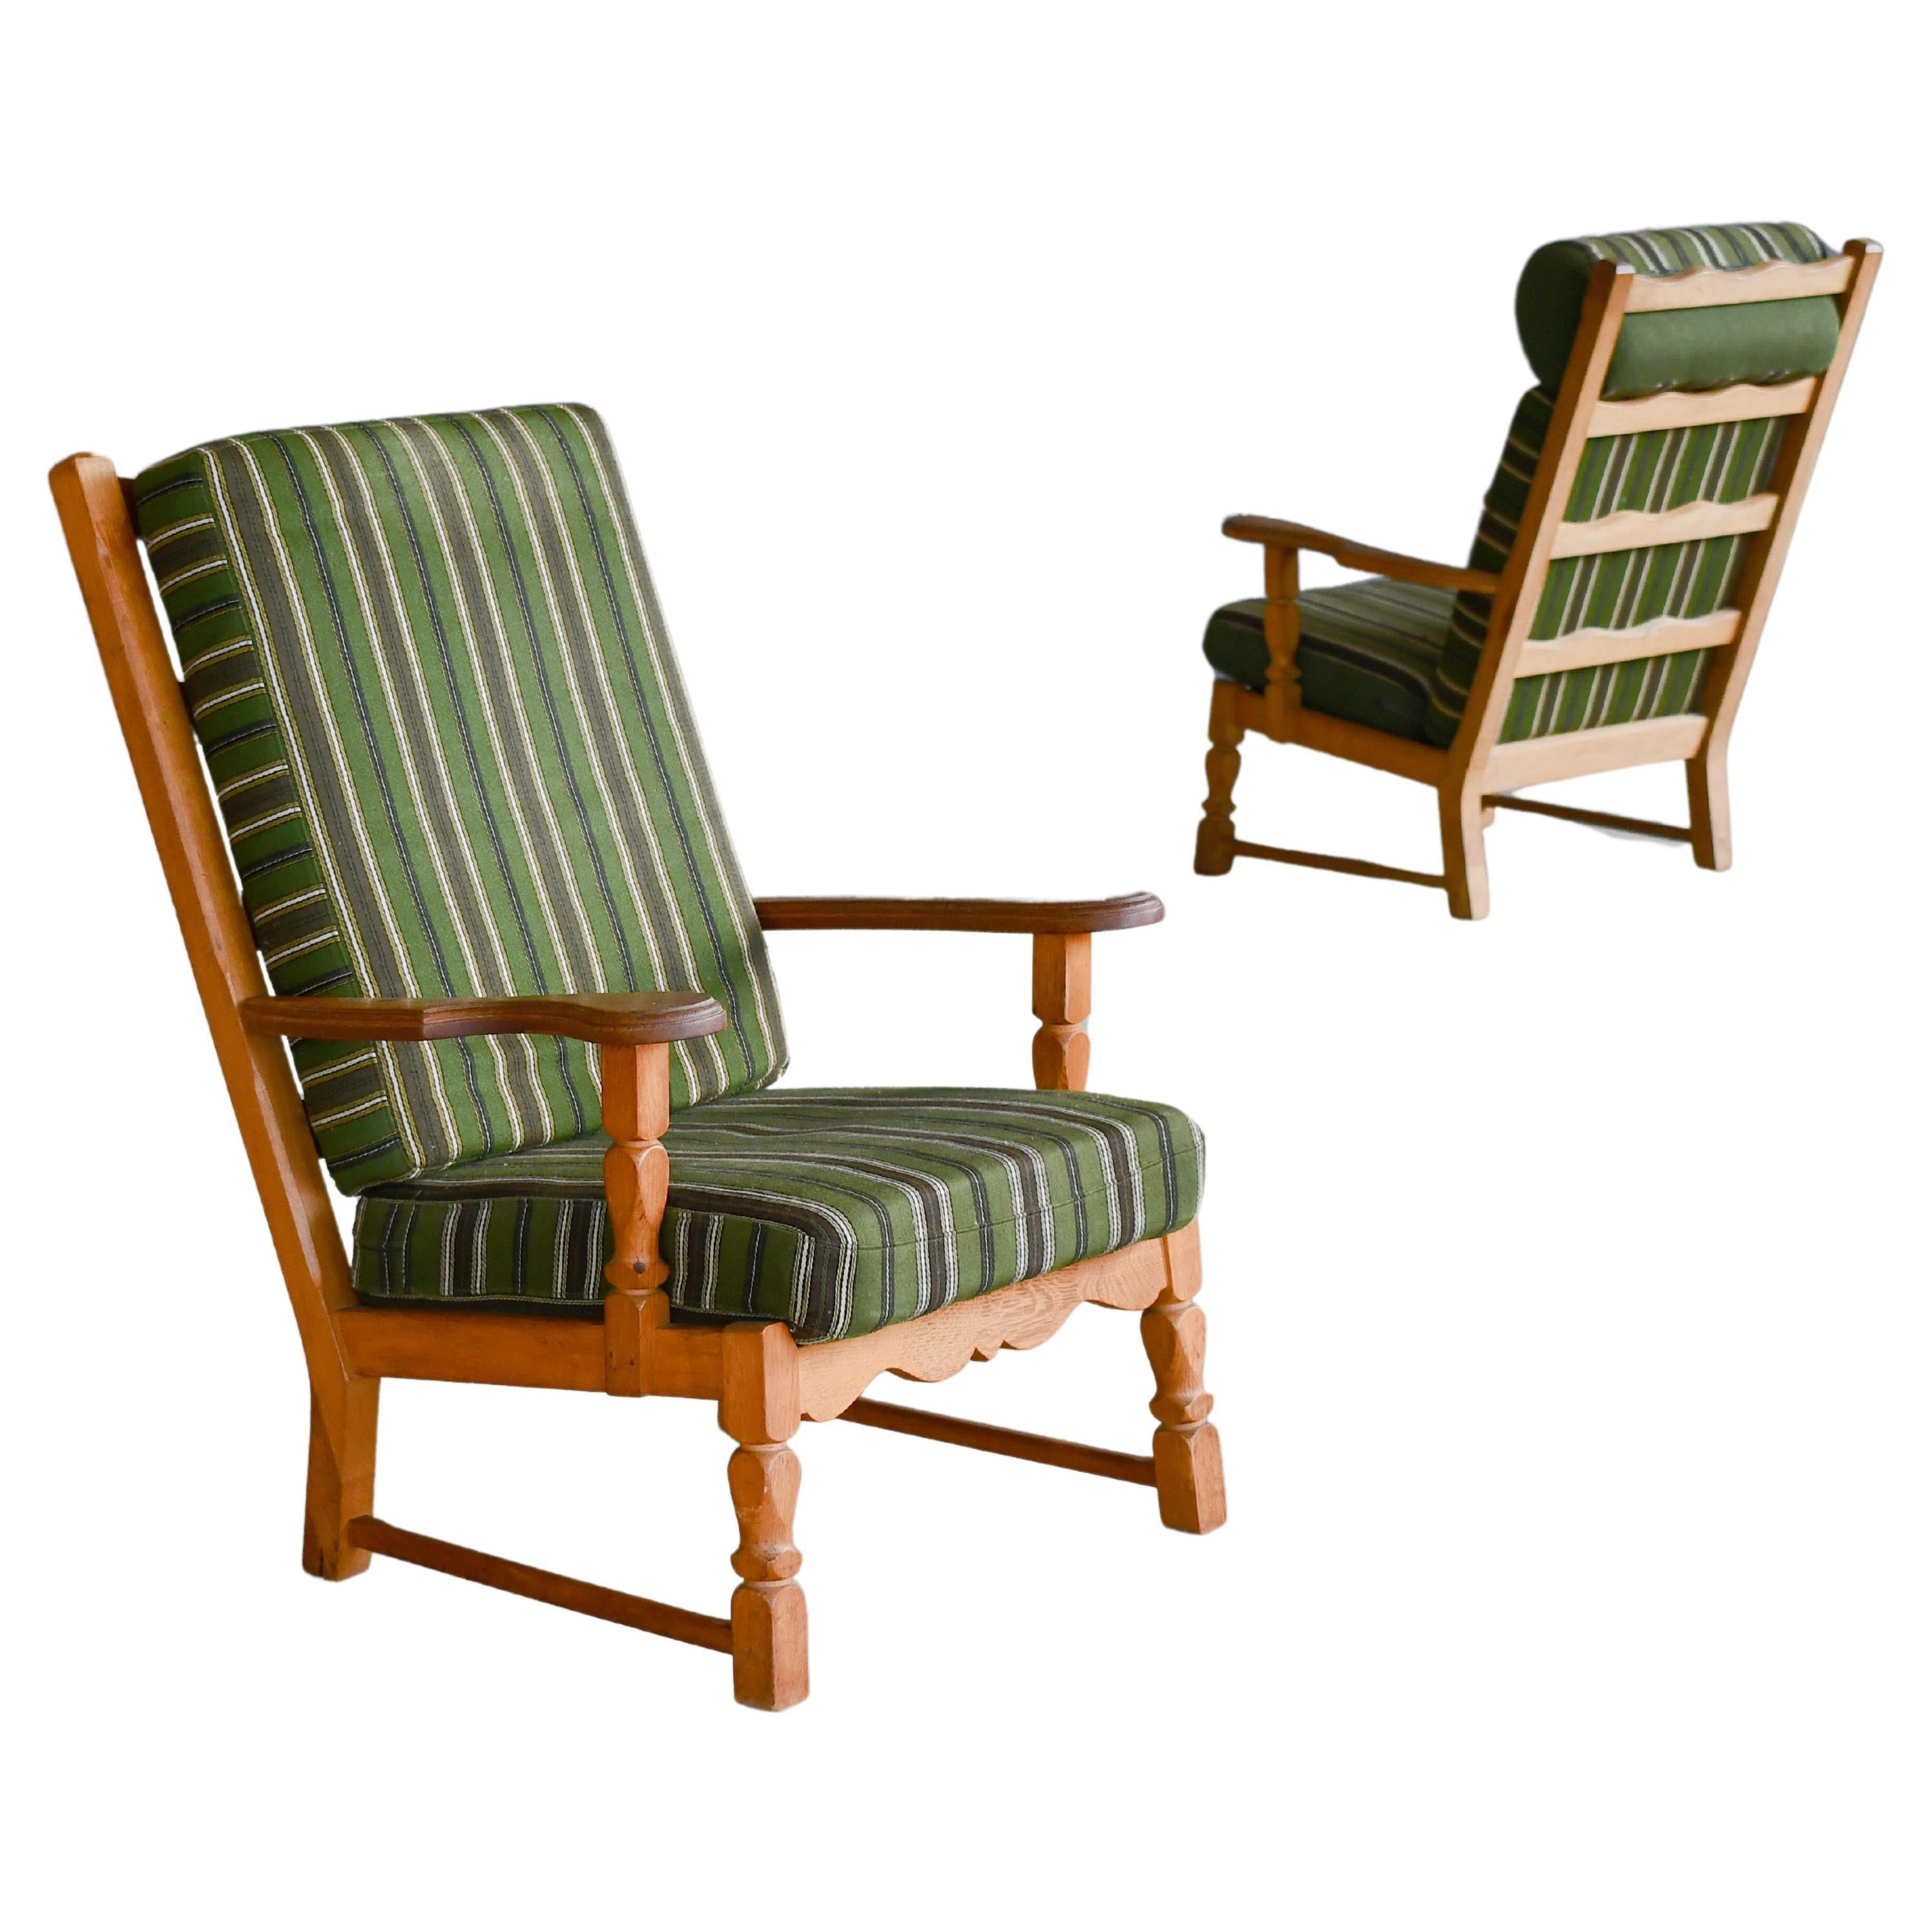 Danish Mid-Century Carved Oak Lounge Chairs in Oak by Kjaernulf, 1960's For Sale